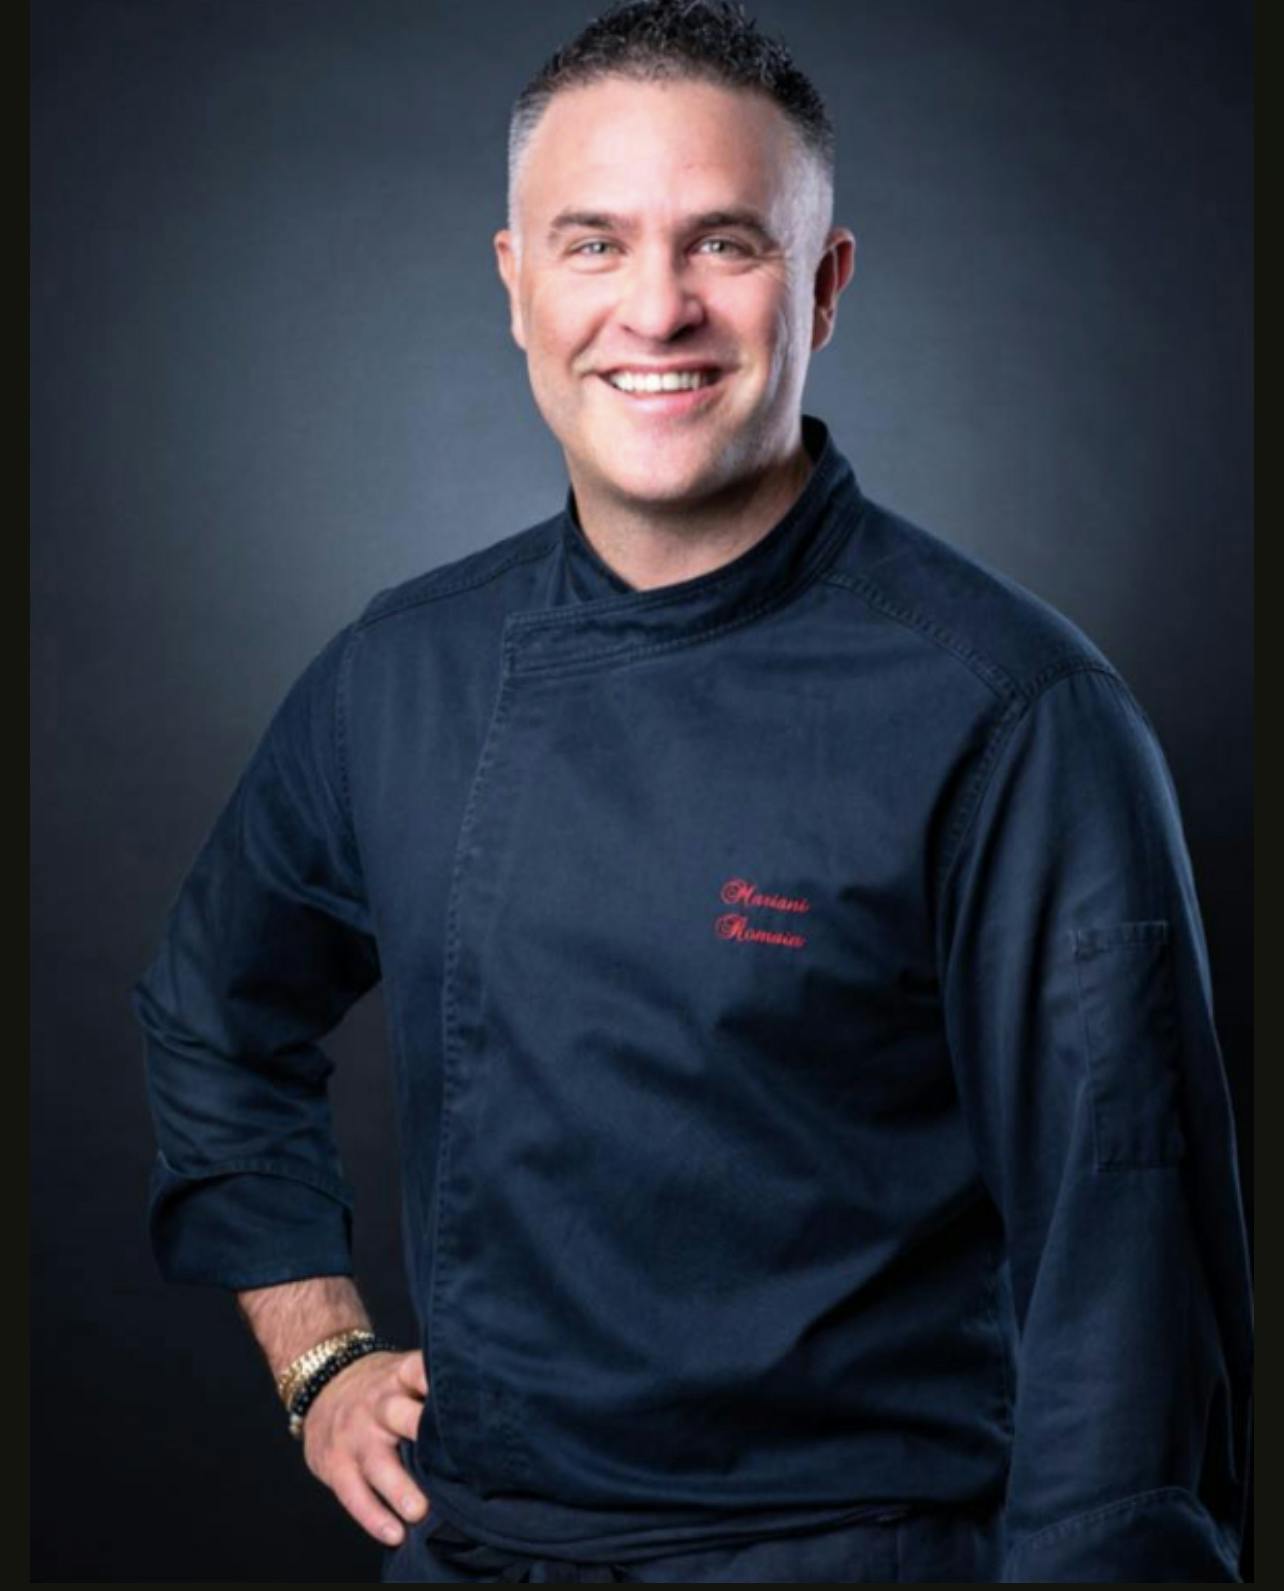 Chef Romain Mariani's picture